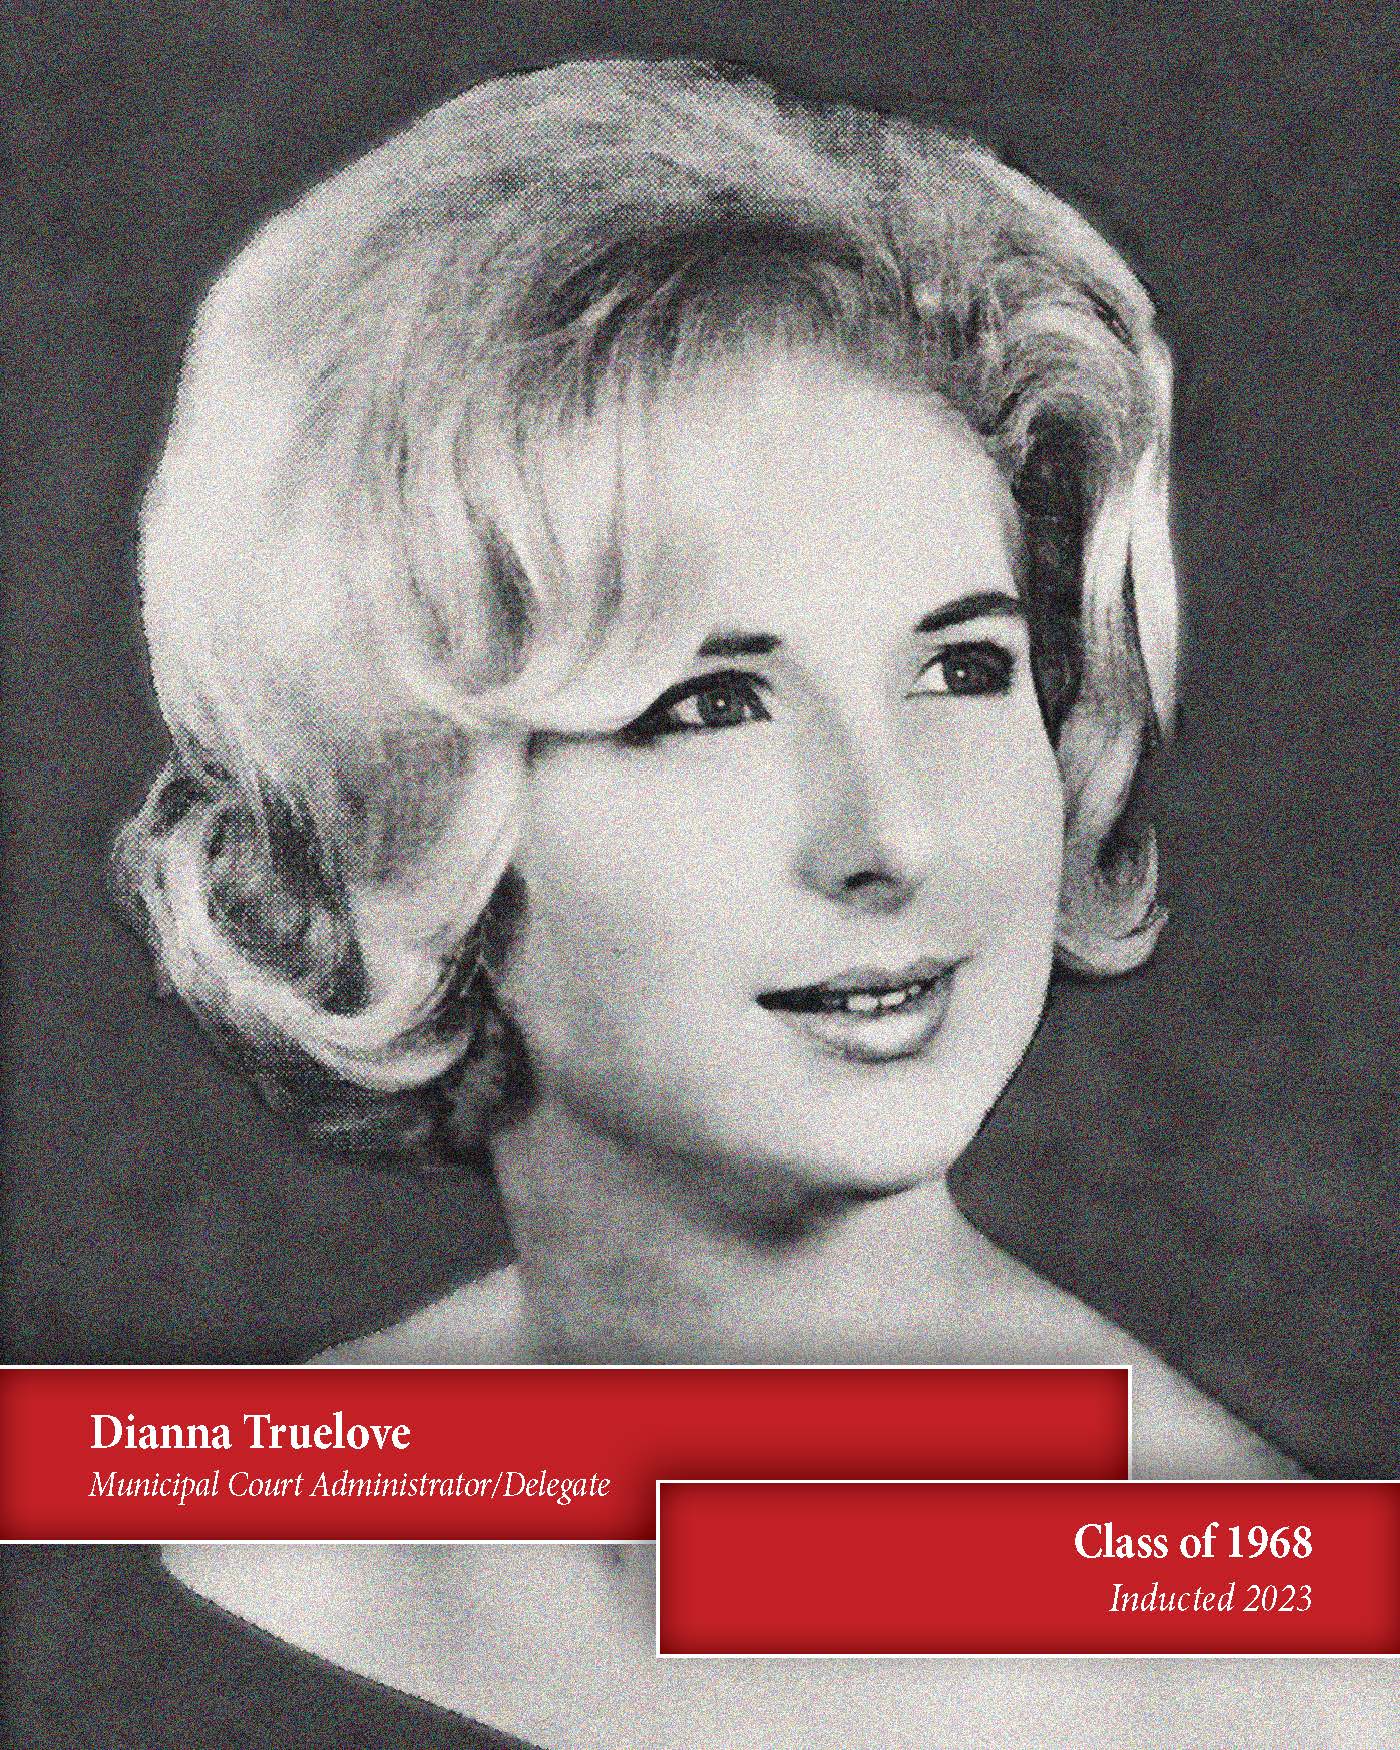 Dianna Truelove, '68